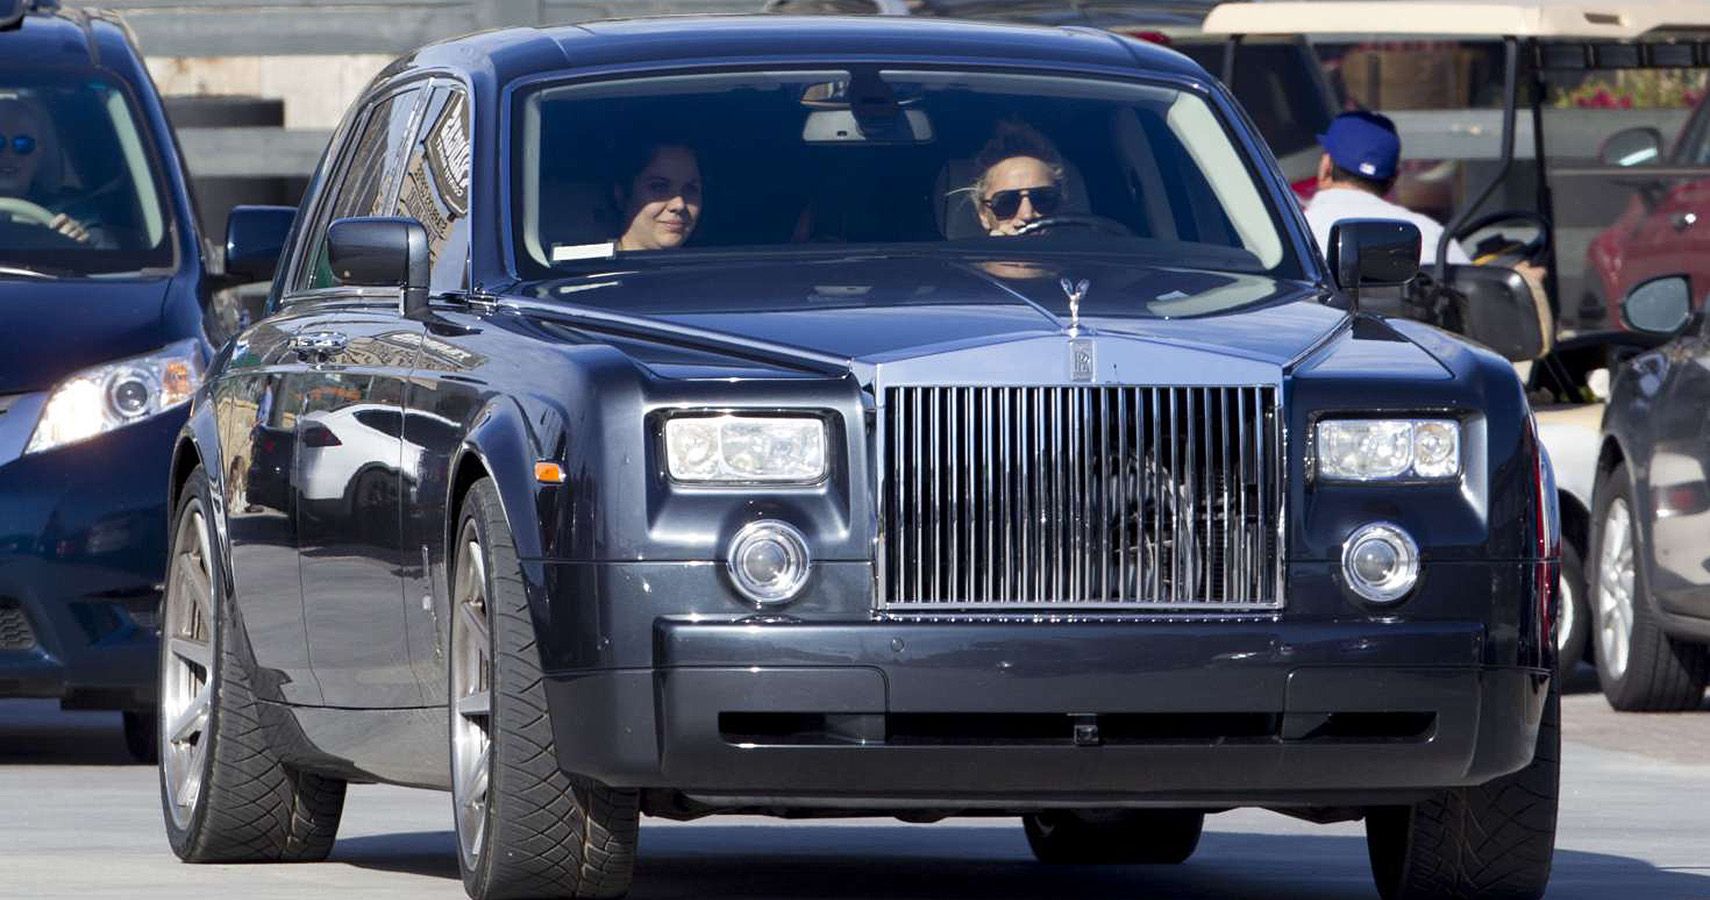 The Giant On Wheels: Lady Gaga's Rolls-Royce Phantom